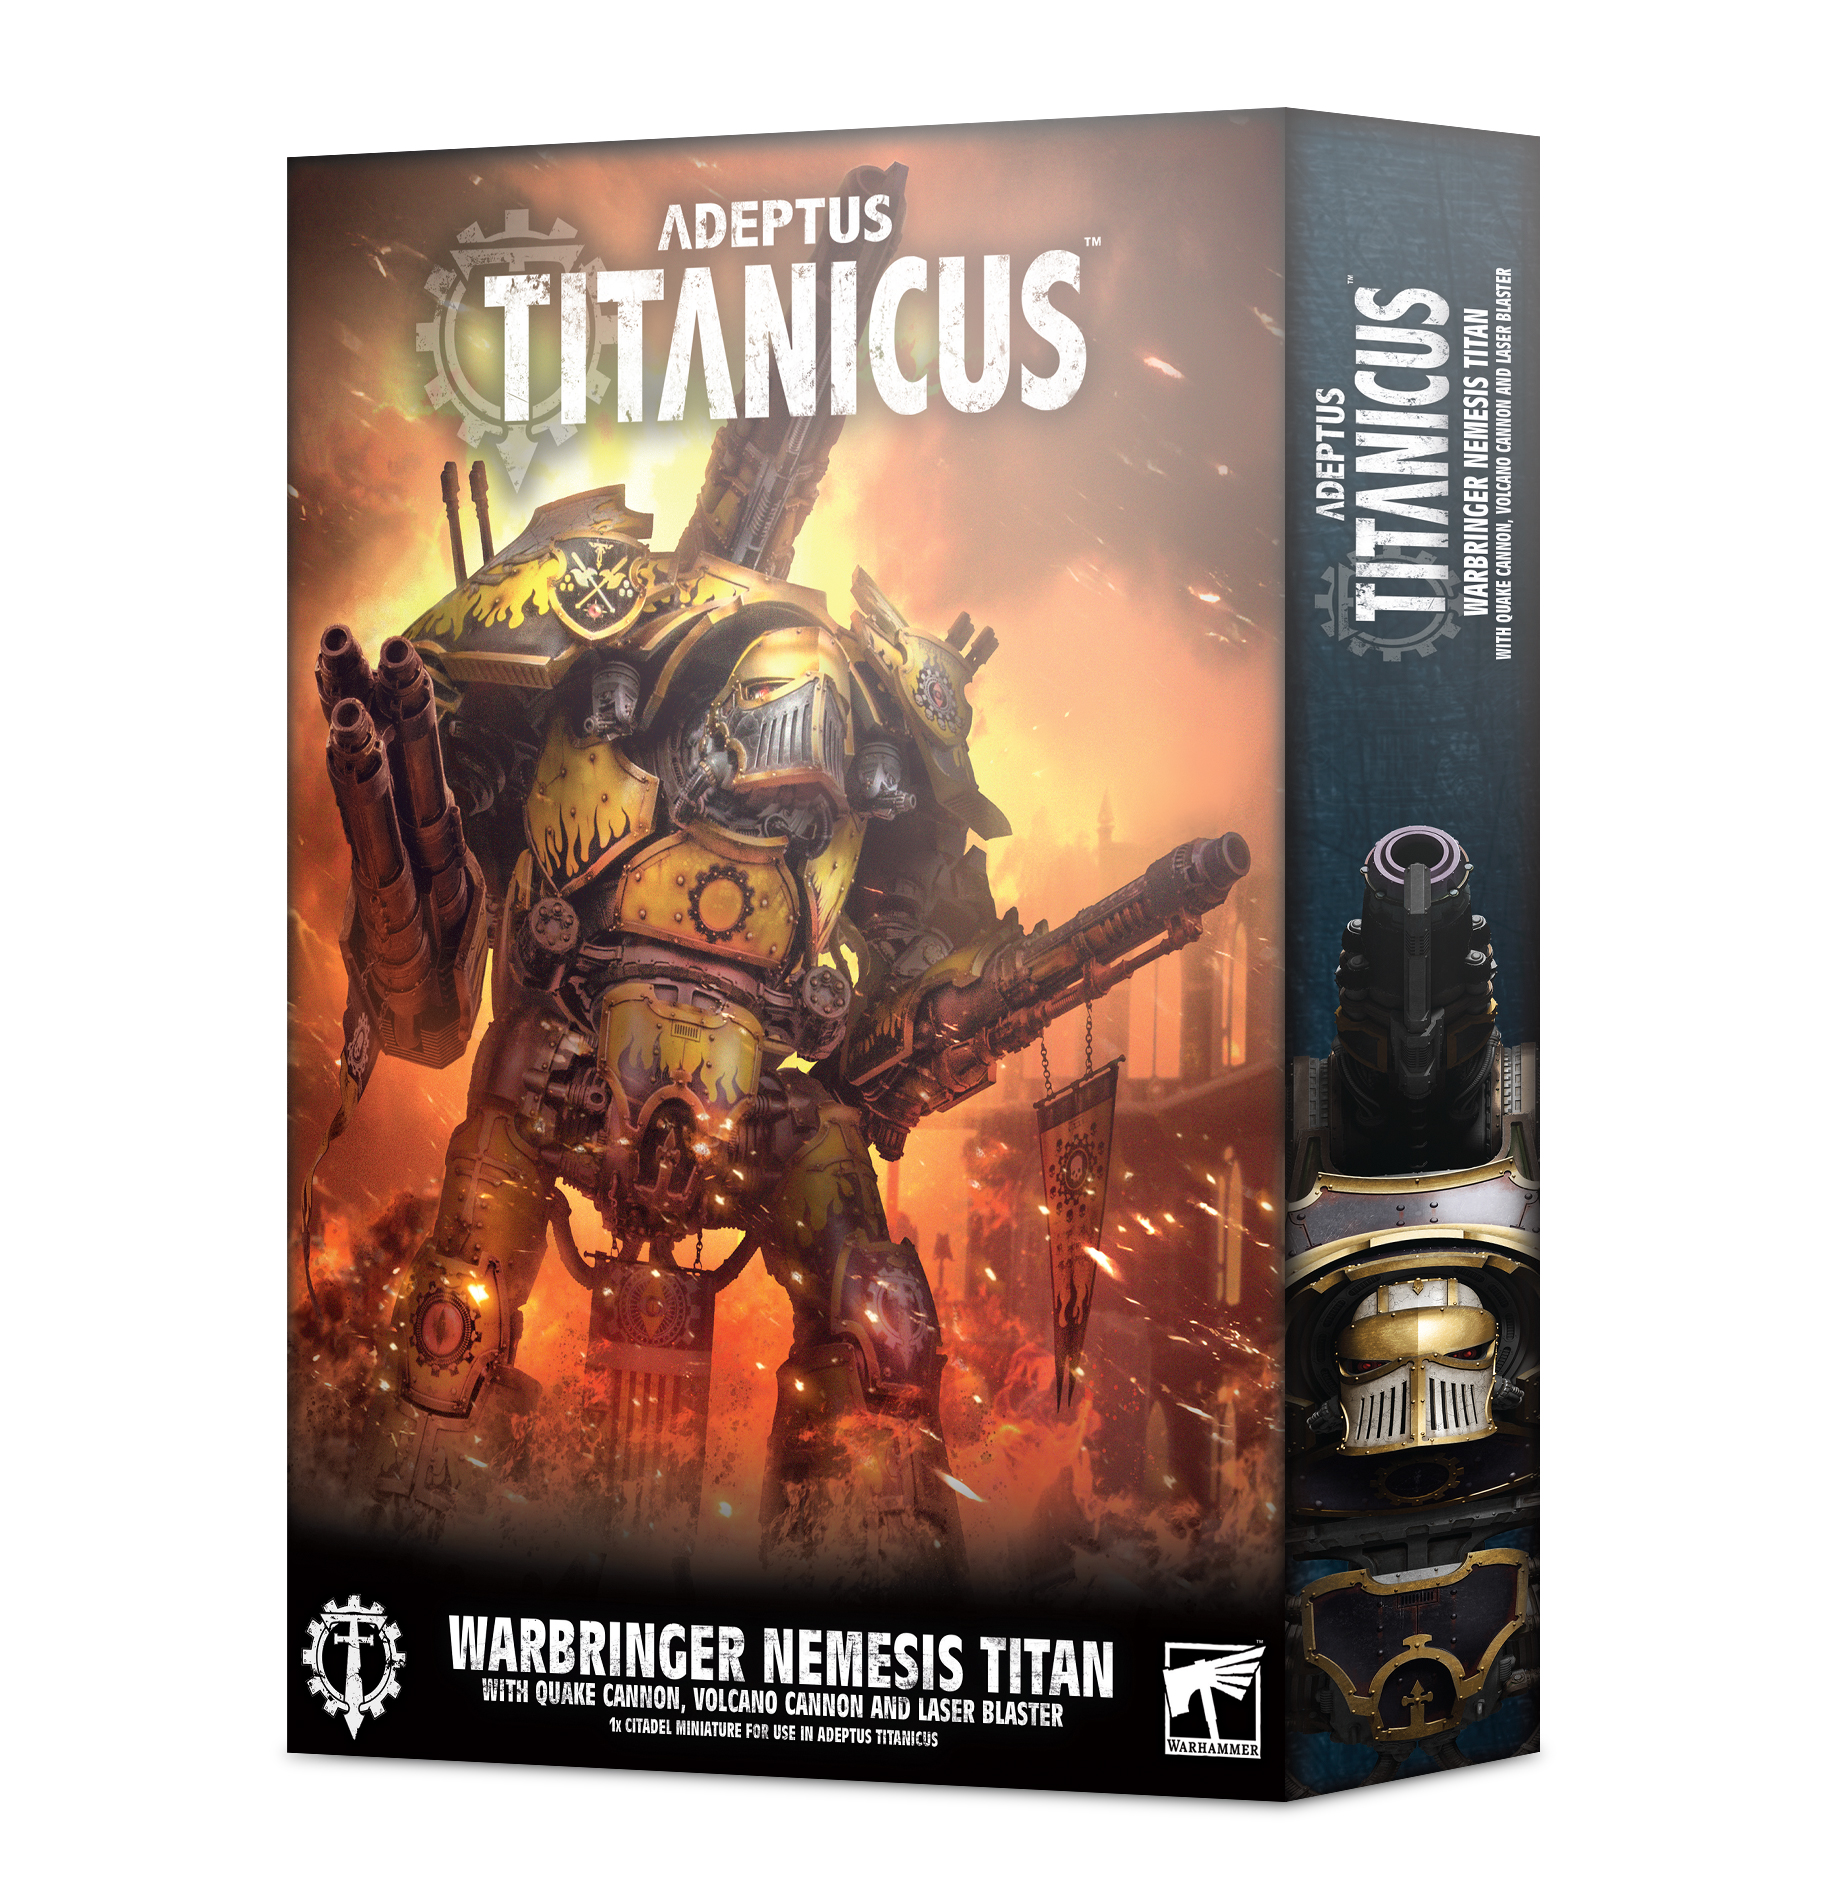 Adeptus Titanicus Warbringer Nemesis Titan with Quake Cannon, Volcano Cannon and Laser Blaster 